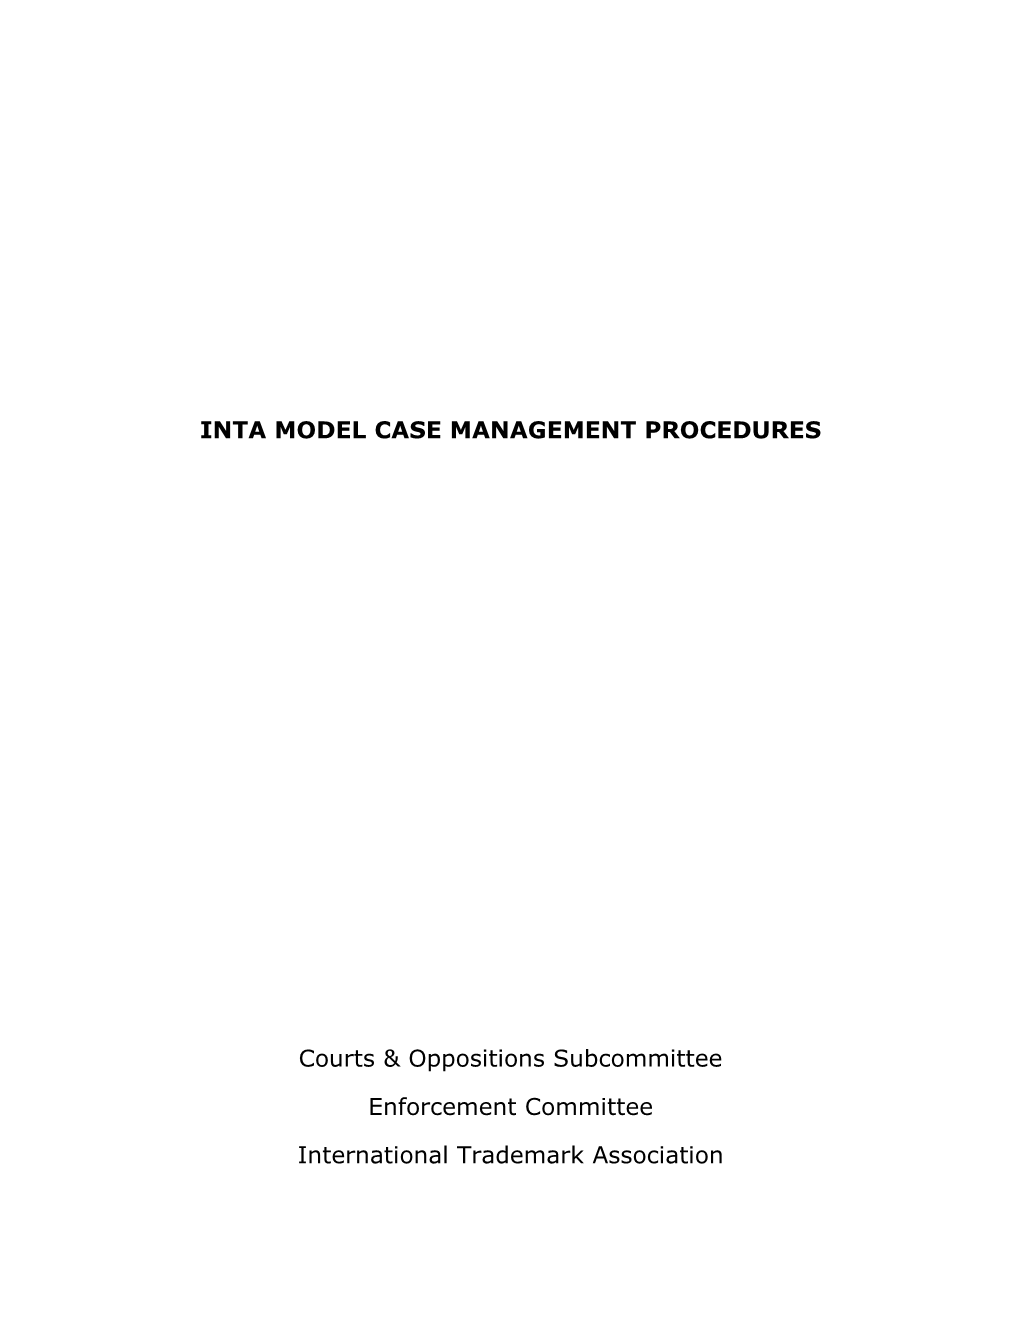 Inta Model Case Management Procedures